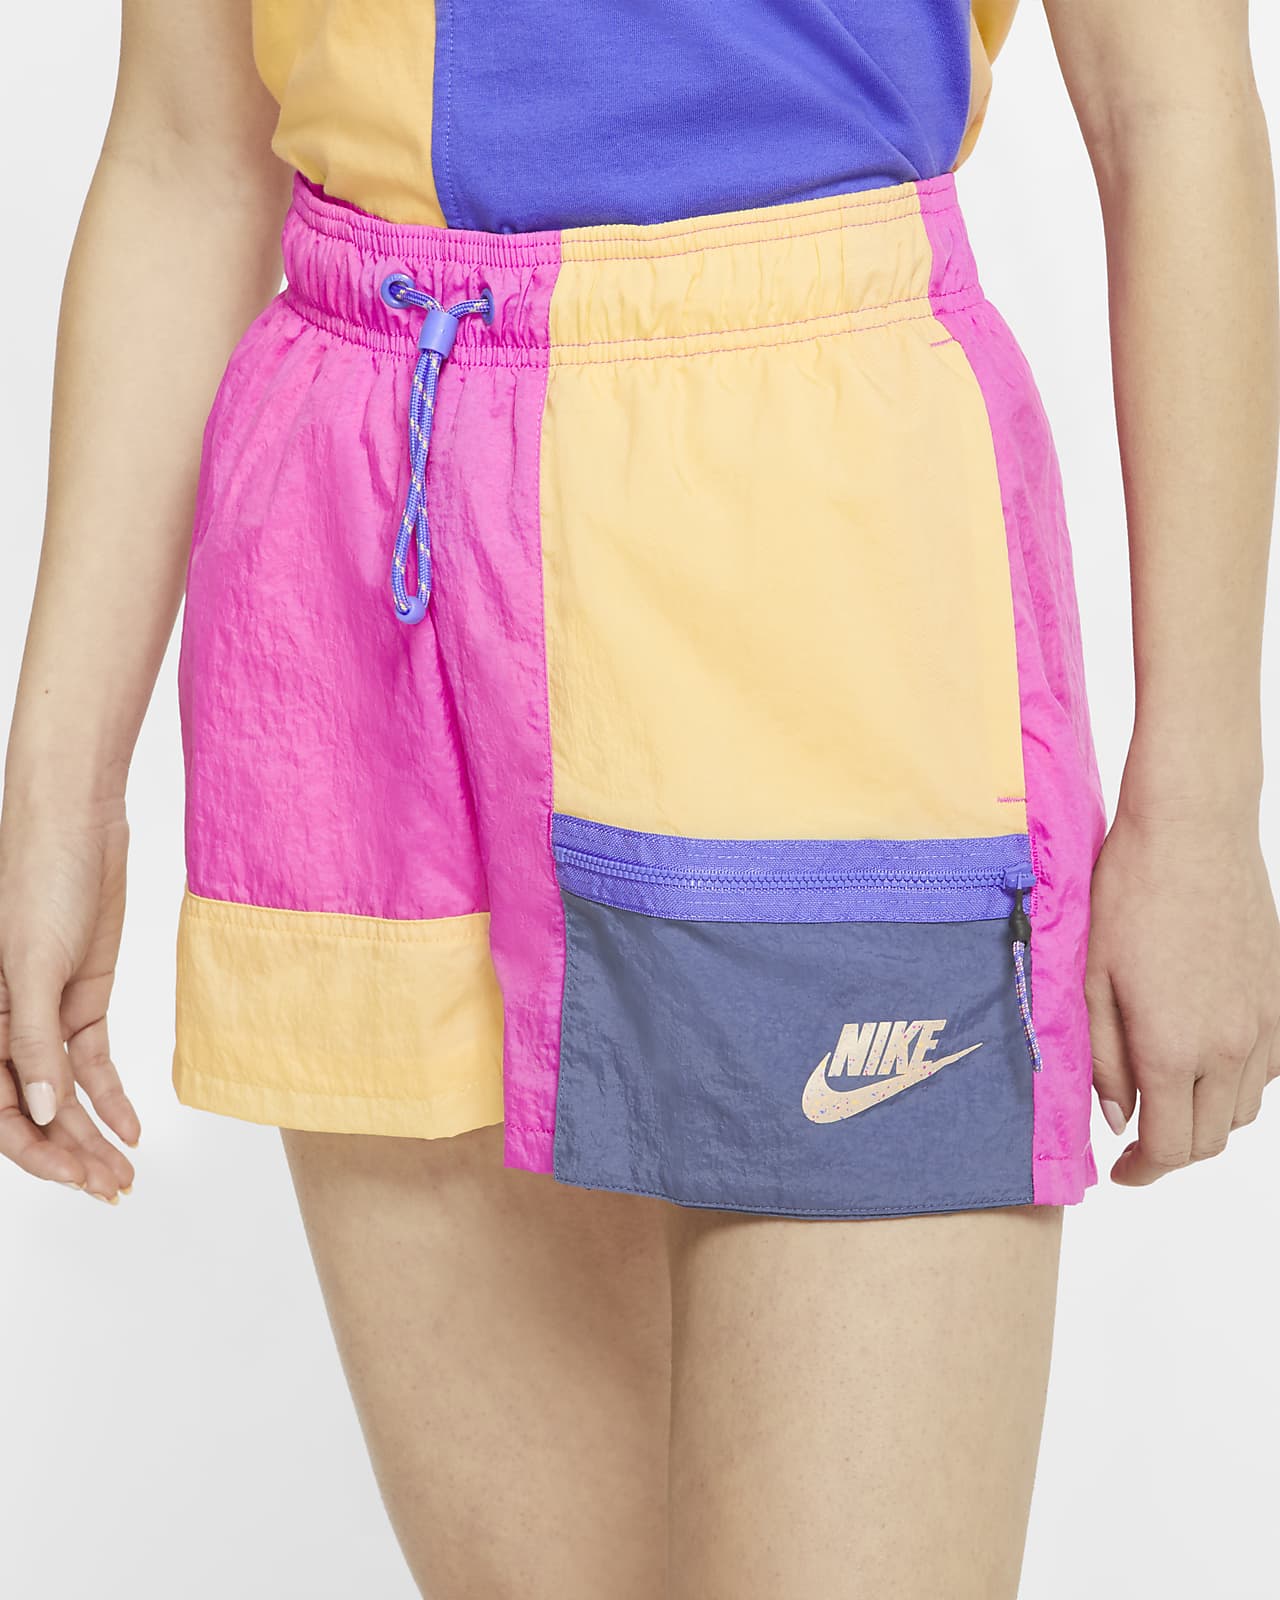 nike pink and yellow shorts